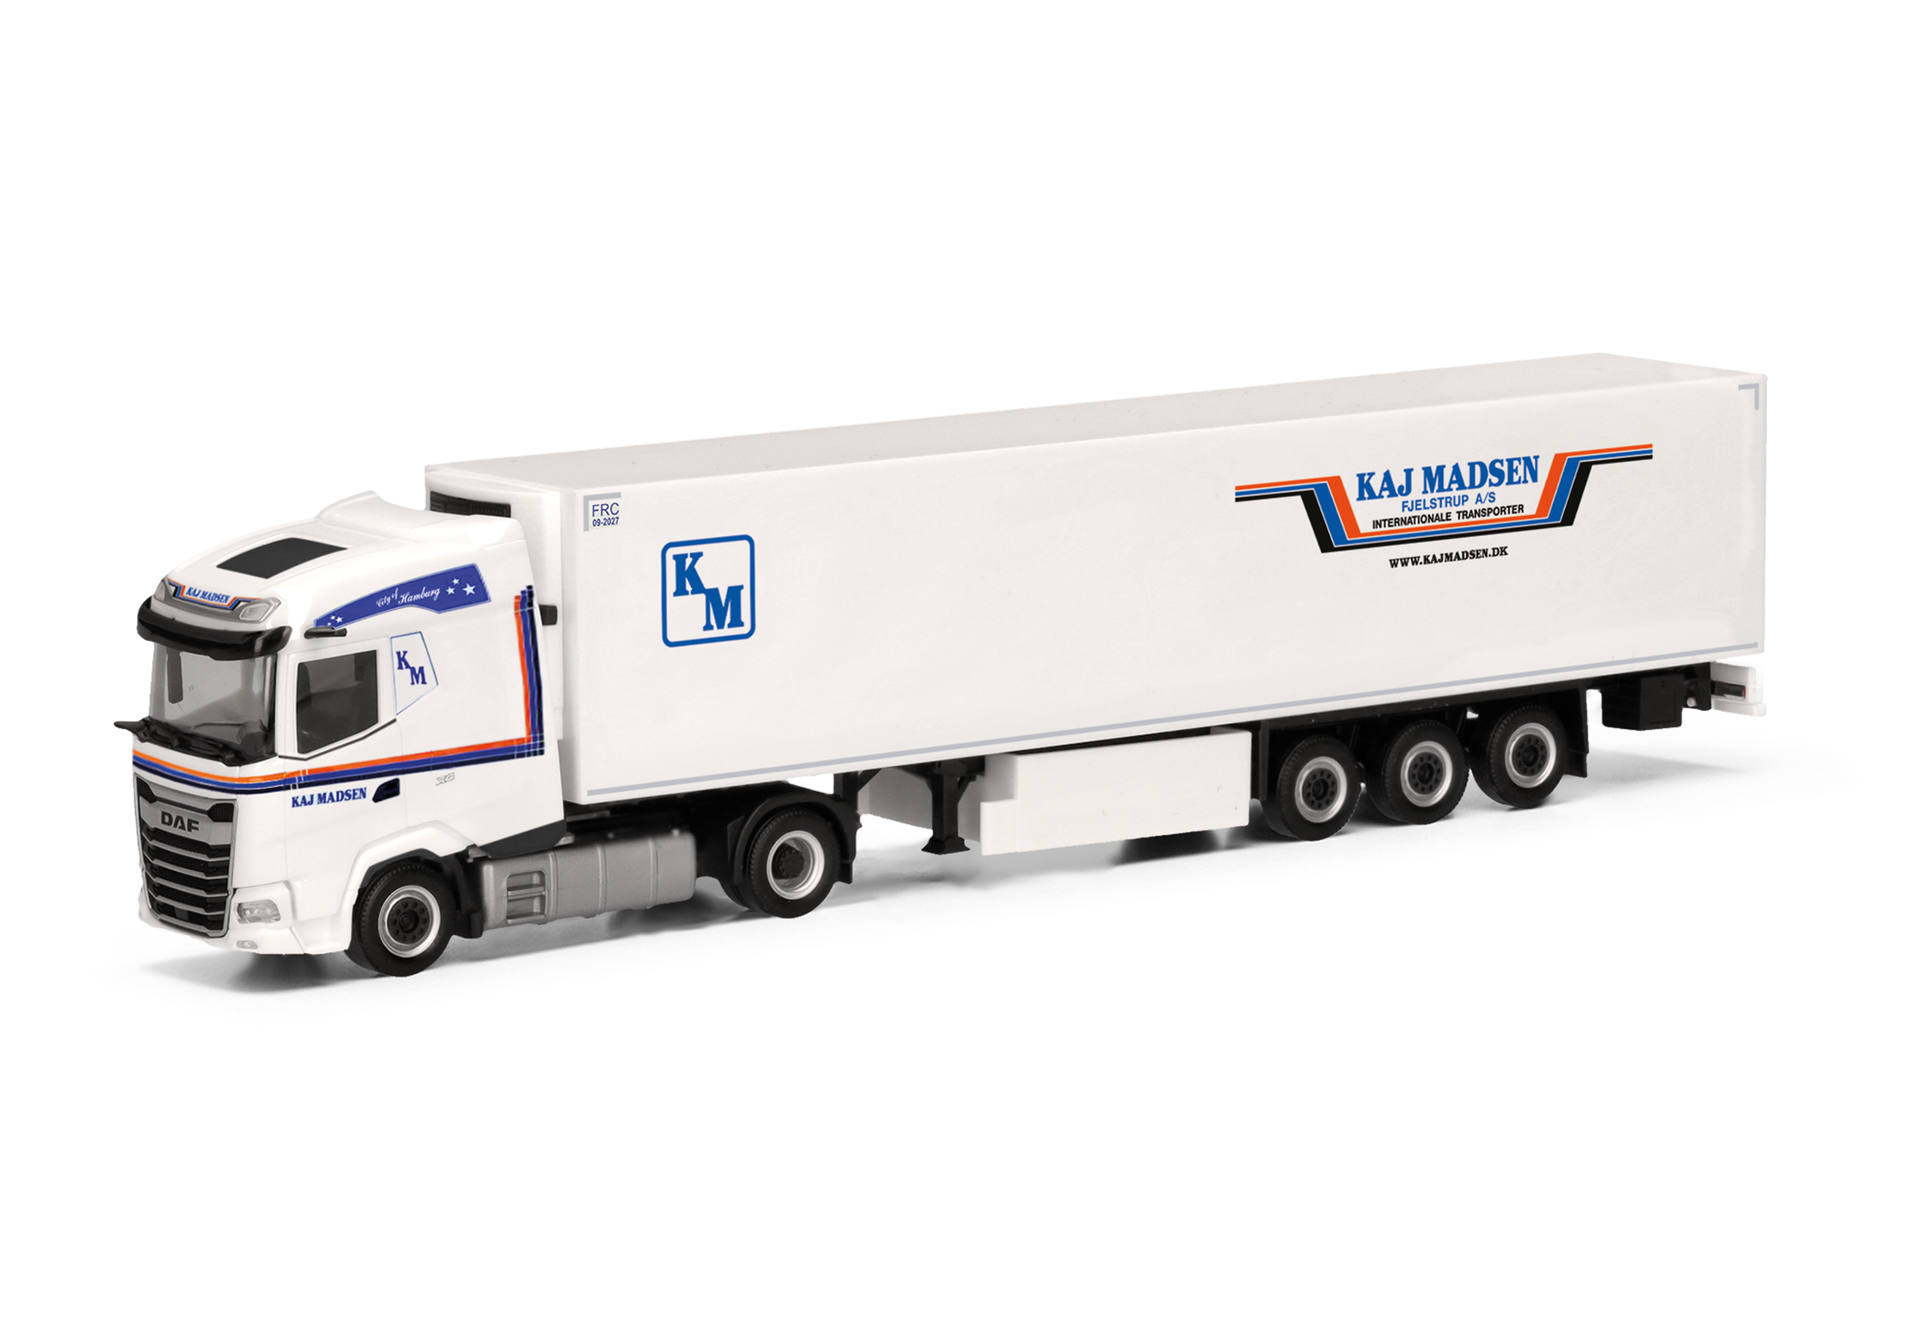 DAF XG refrigerated box semitrailer truck "Kaj Madsen" (Denmark/Kolding)